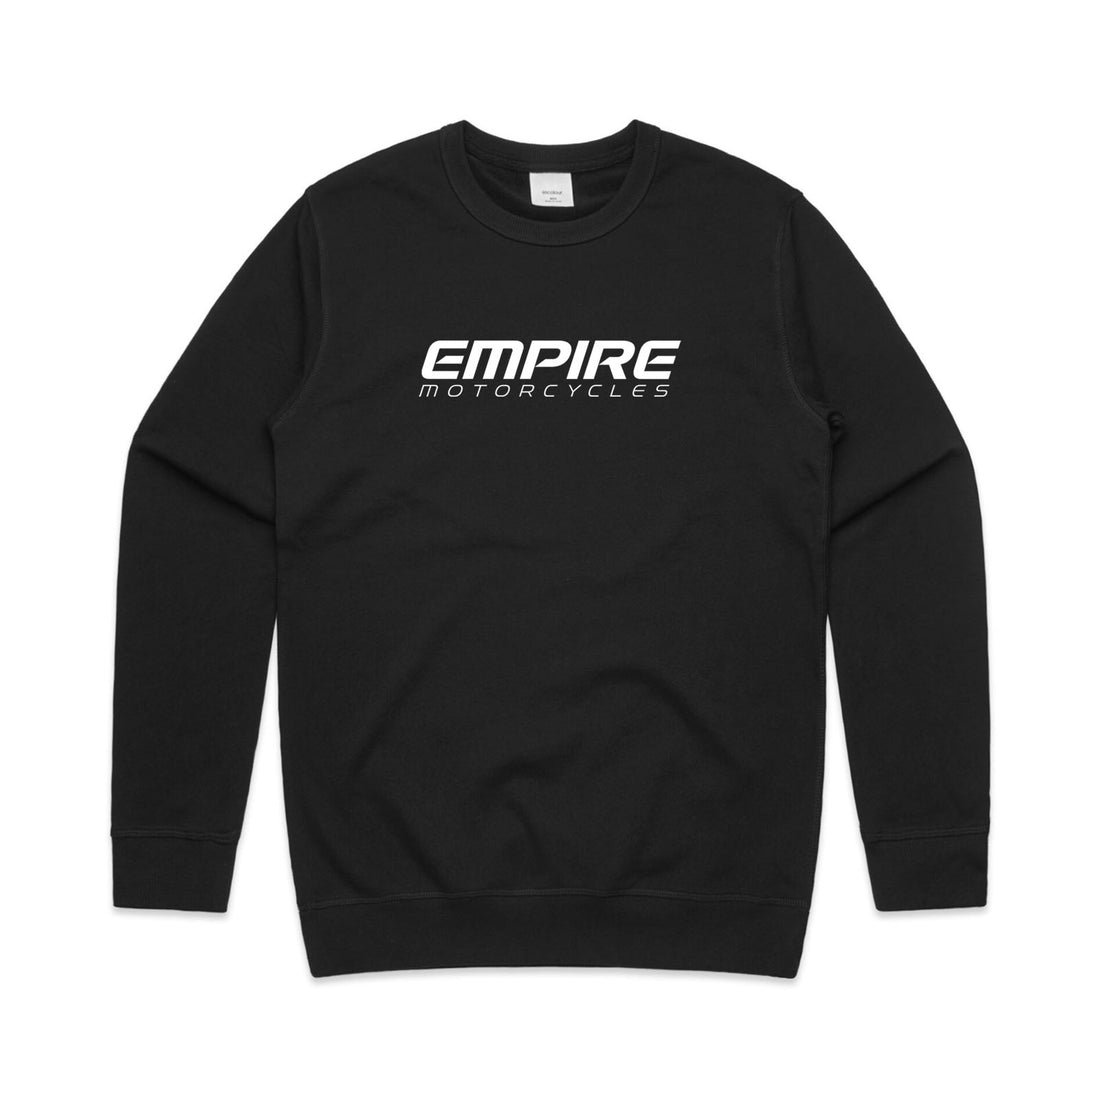 Empire Motorcycles Crew Neck Jumper - Black